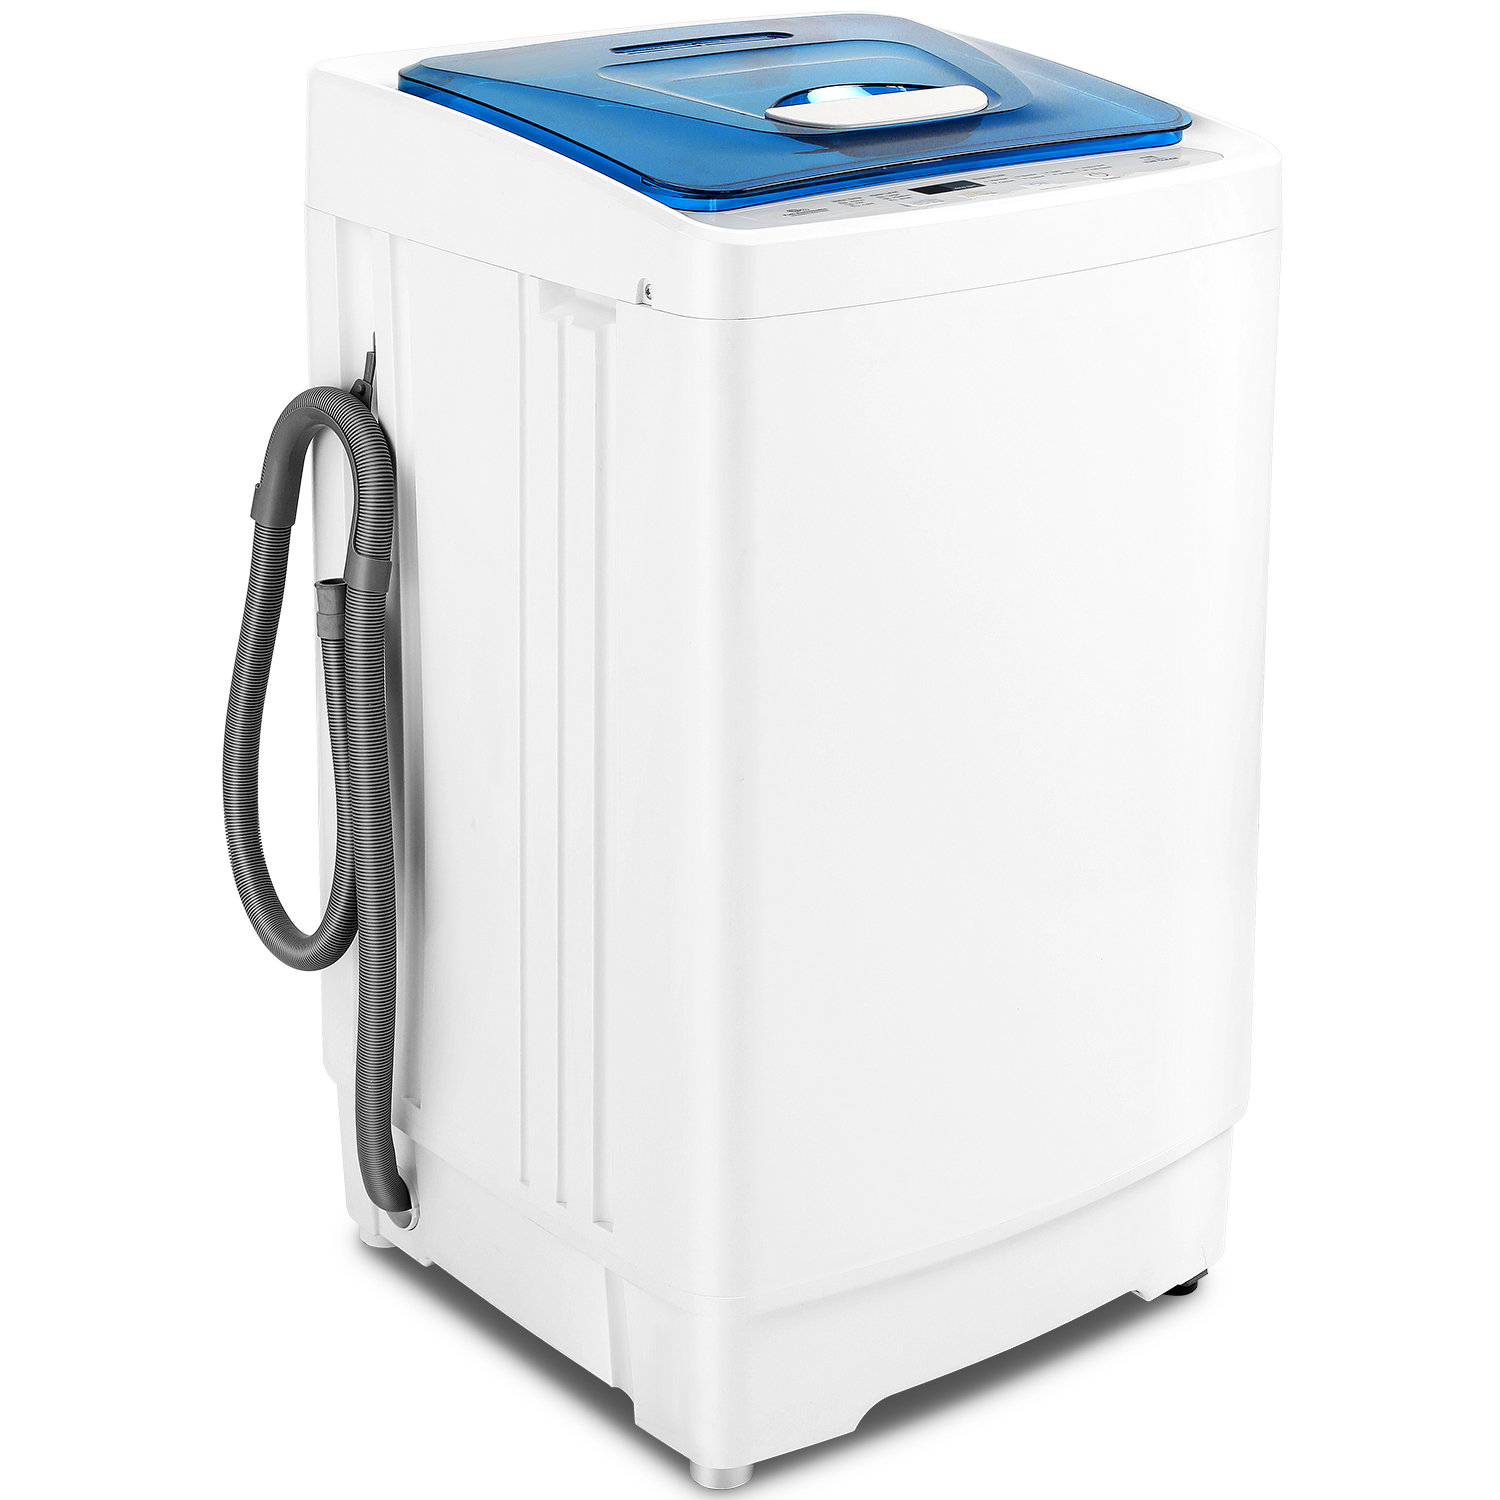 17.8/15.6lbs Energy Saving Washer 2 in 1 Portable Washing Machine 8 Water  Level!